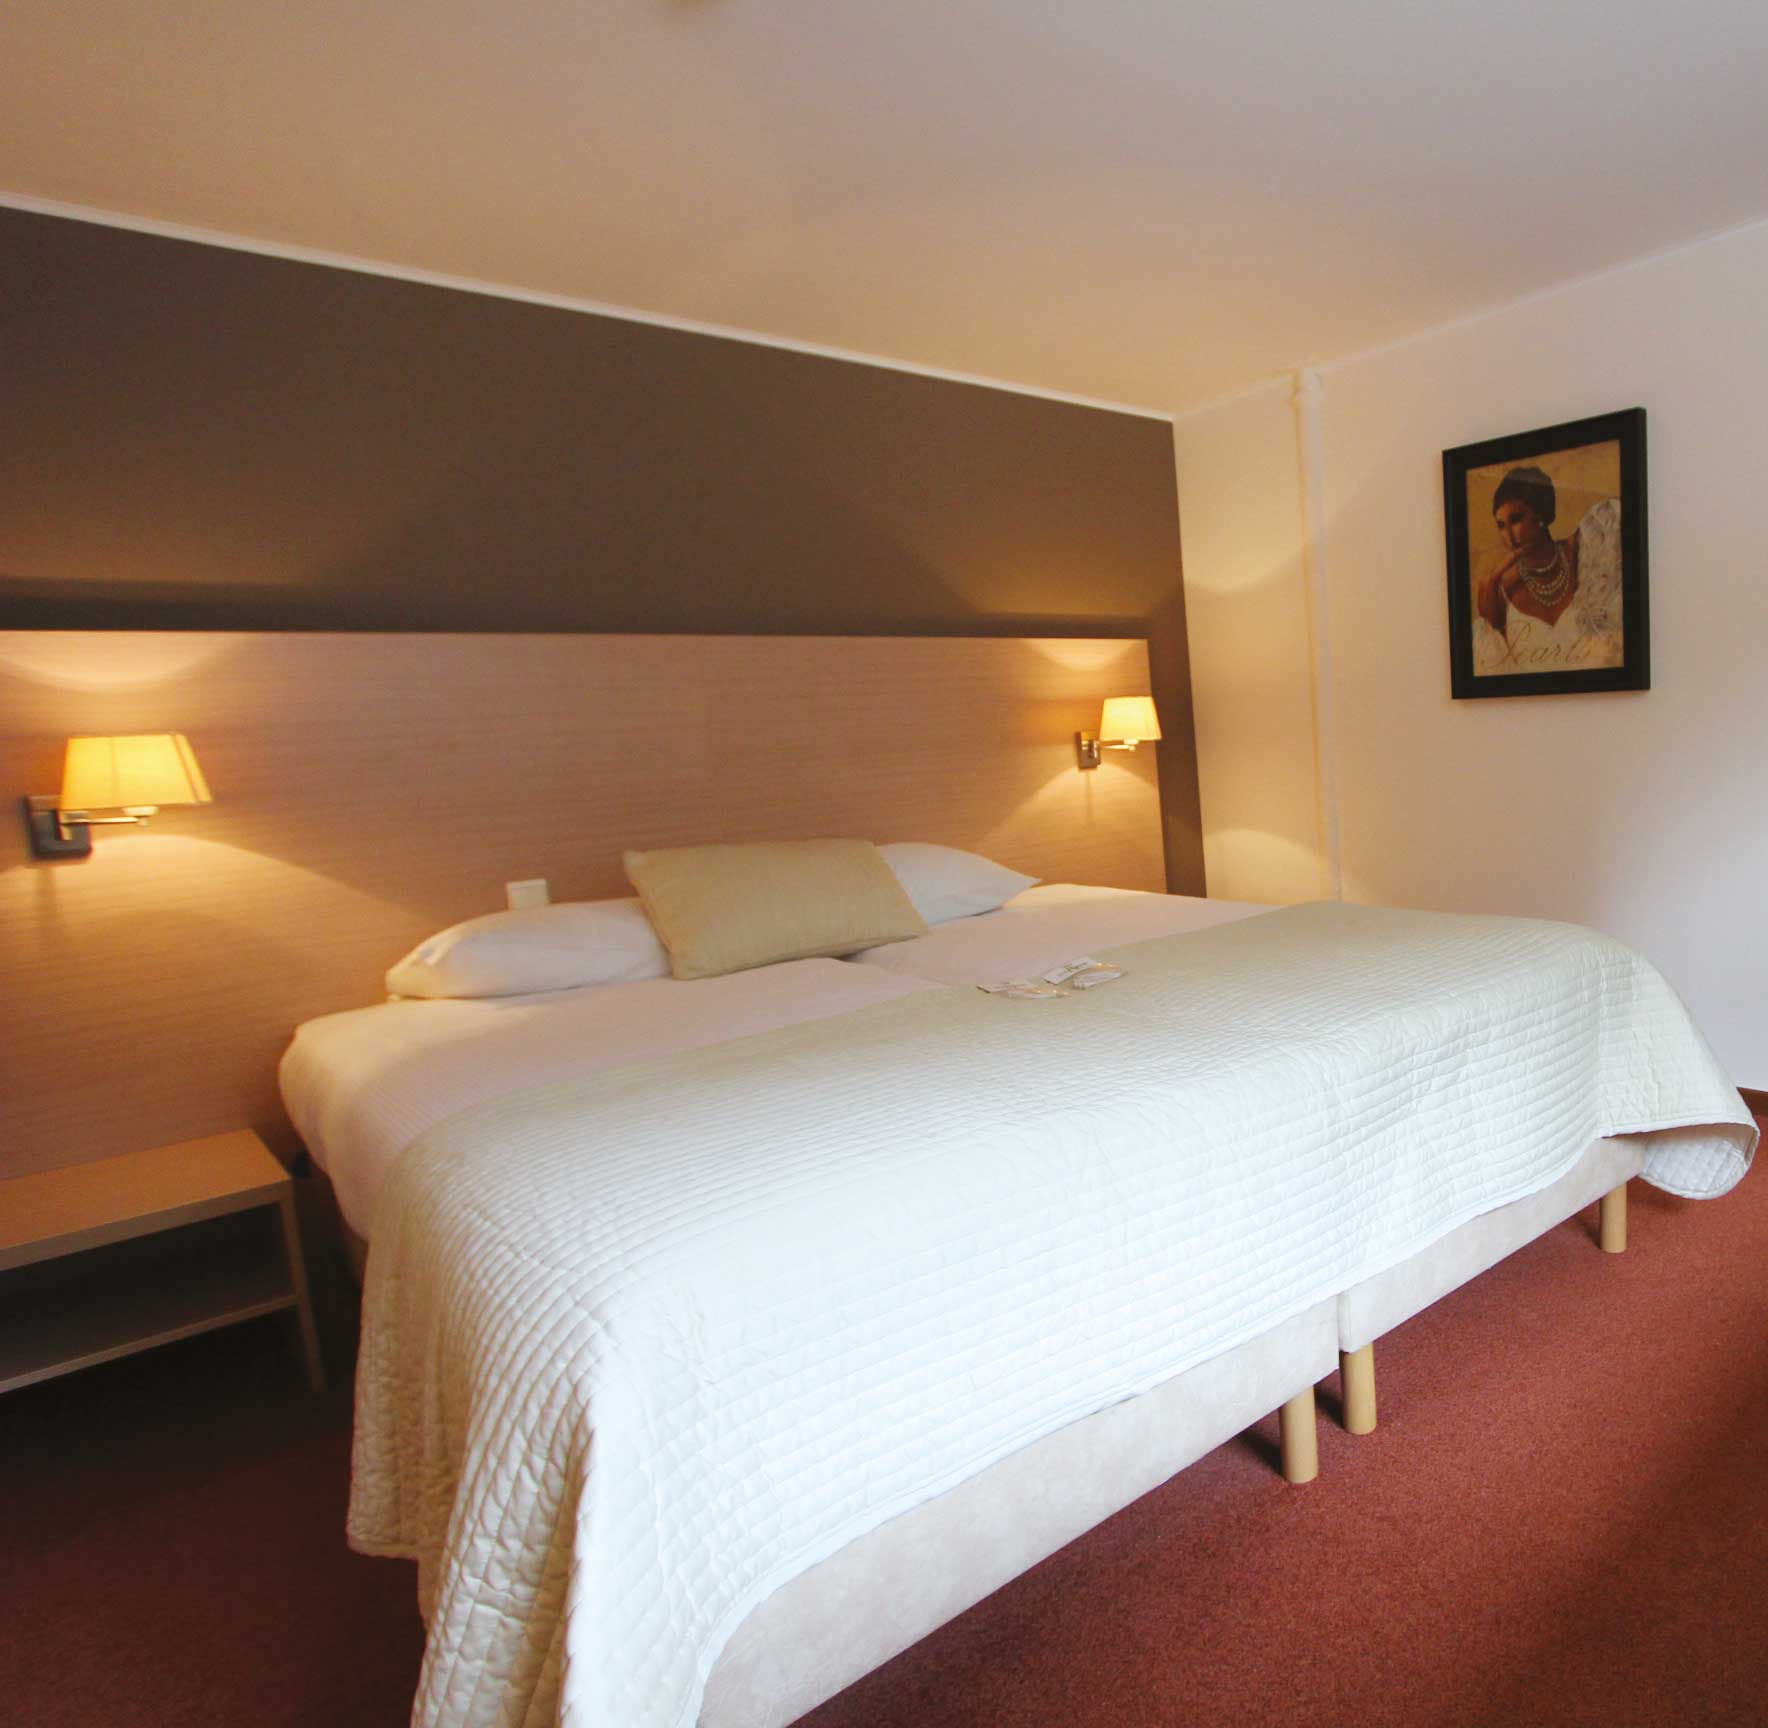 Golf-reizen-Golf-Expedition-België-Regio-Luik-Golf-hotel-Henri-Chapelle-bedroom-2